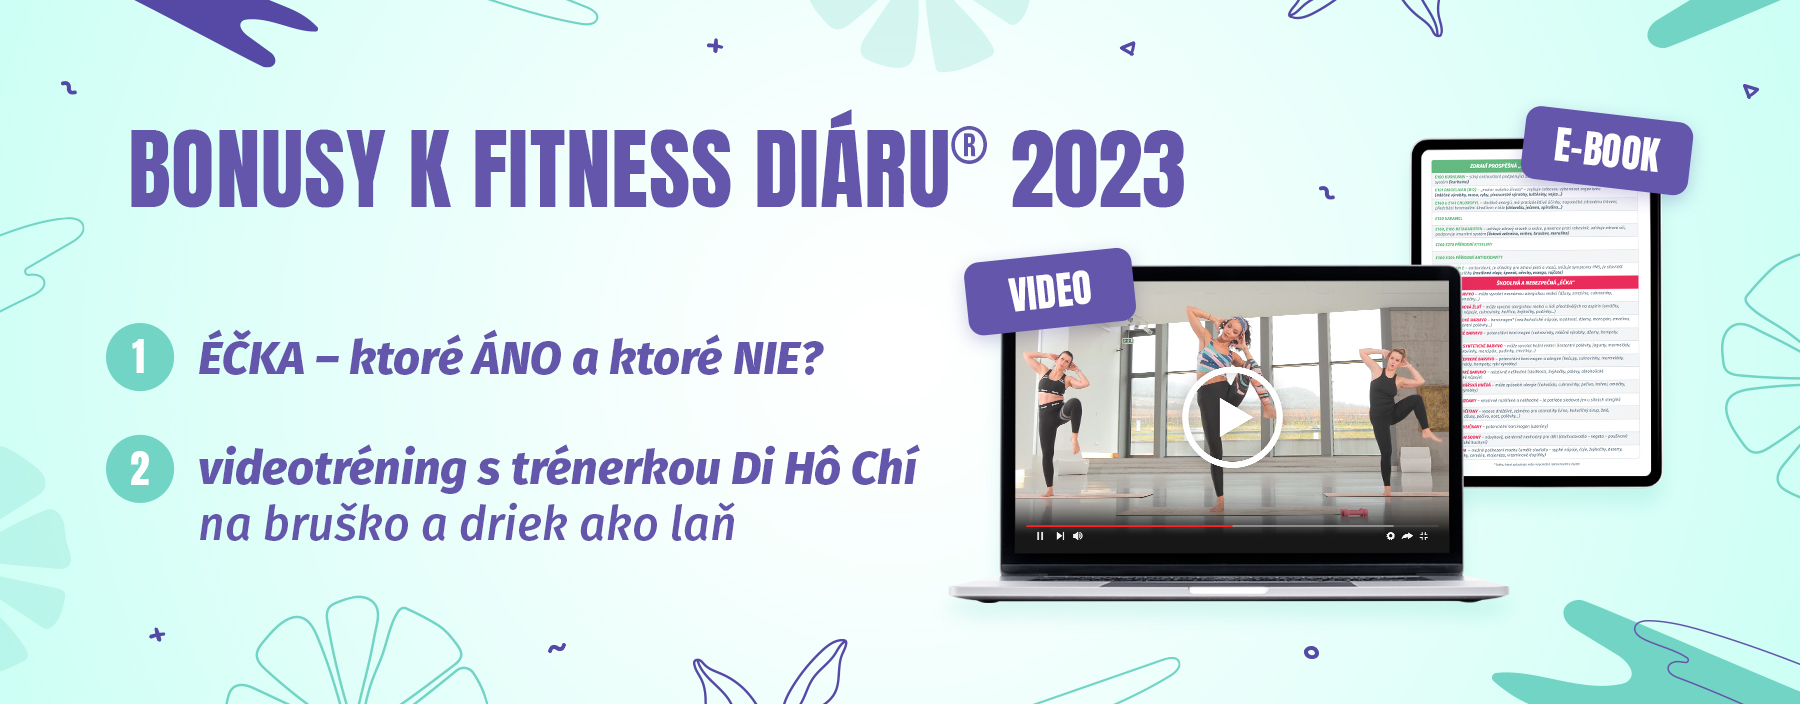 fitness diar 2023 bonusy 